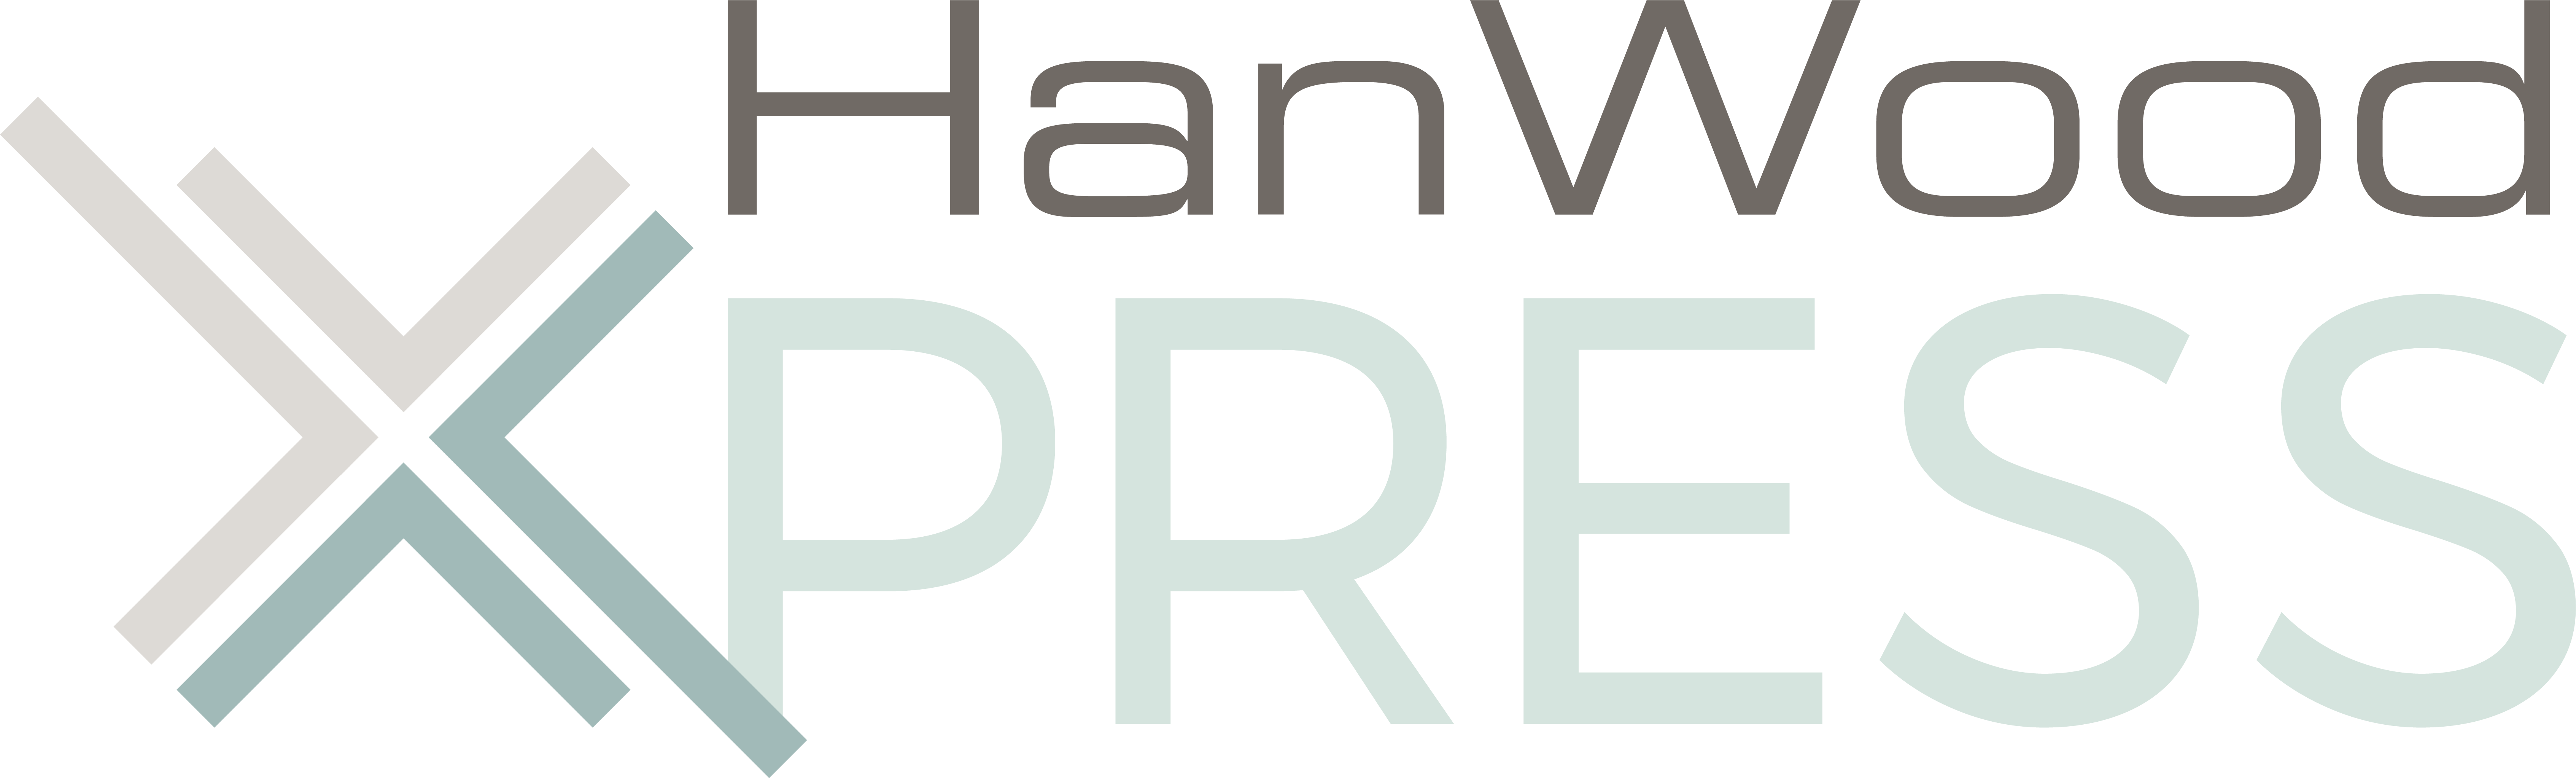 Hanwood Xpress logo